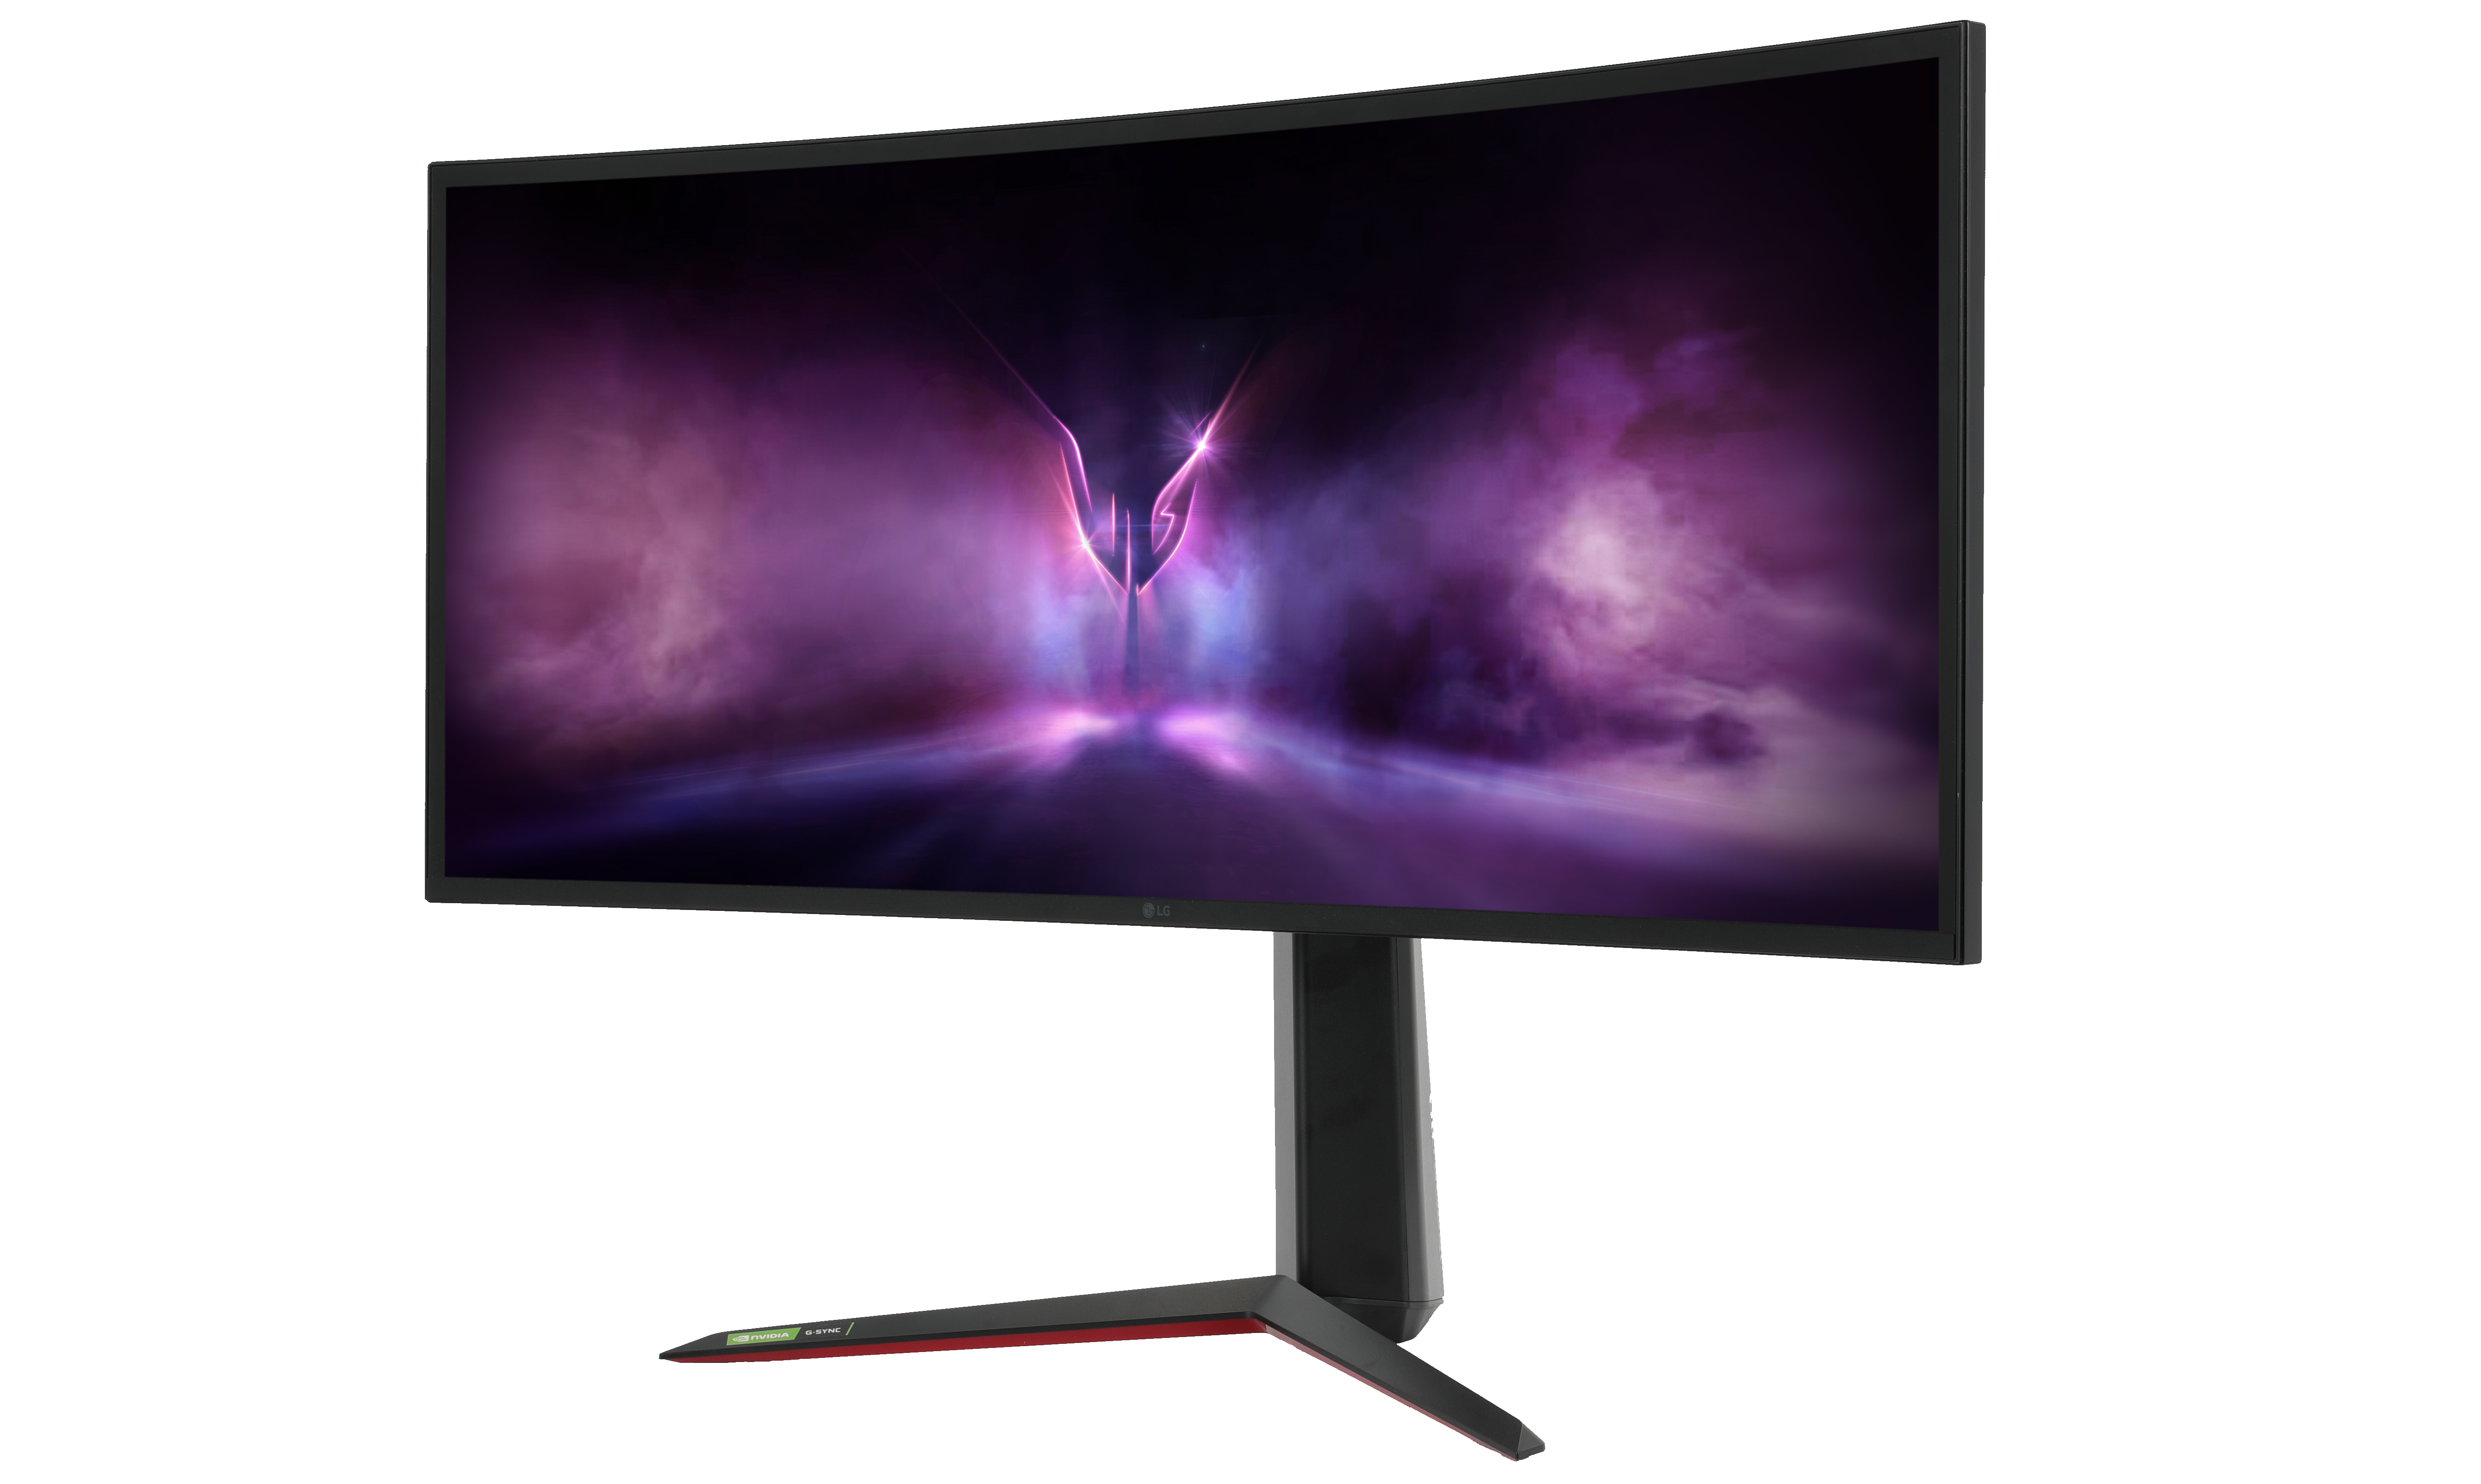 ASUS/Acer 4K 144Hz G-Sync monitors should arrive in Q3 2018